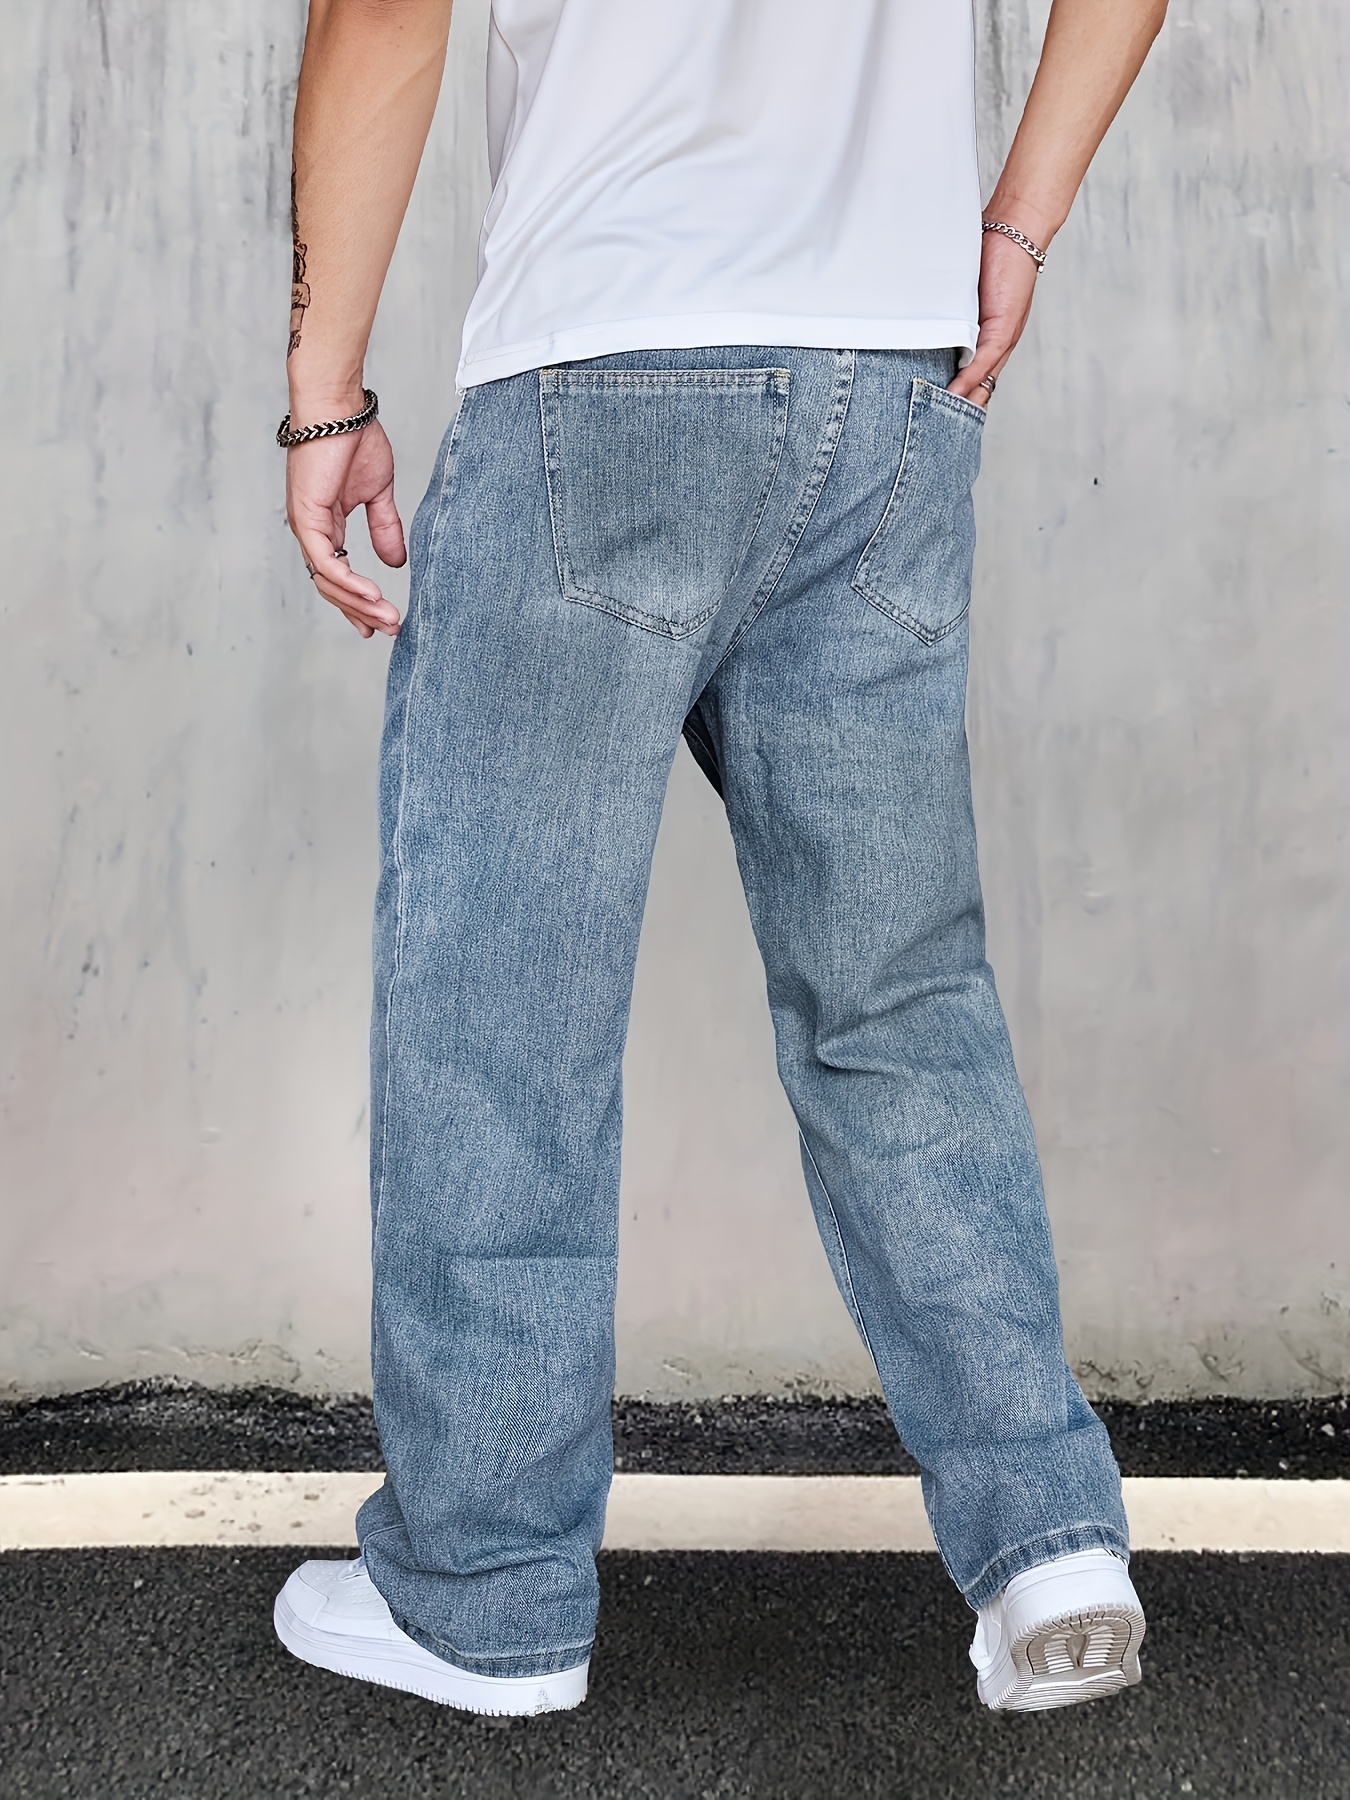 Flared Trousers for Men Vintage Wide Leg Fashion Pants Solid Regular Fit  High Waist Hip Hop Pants Lightweight Pants